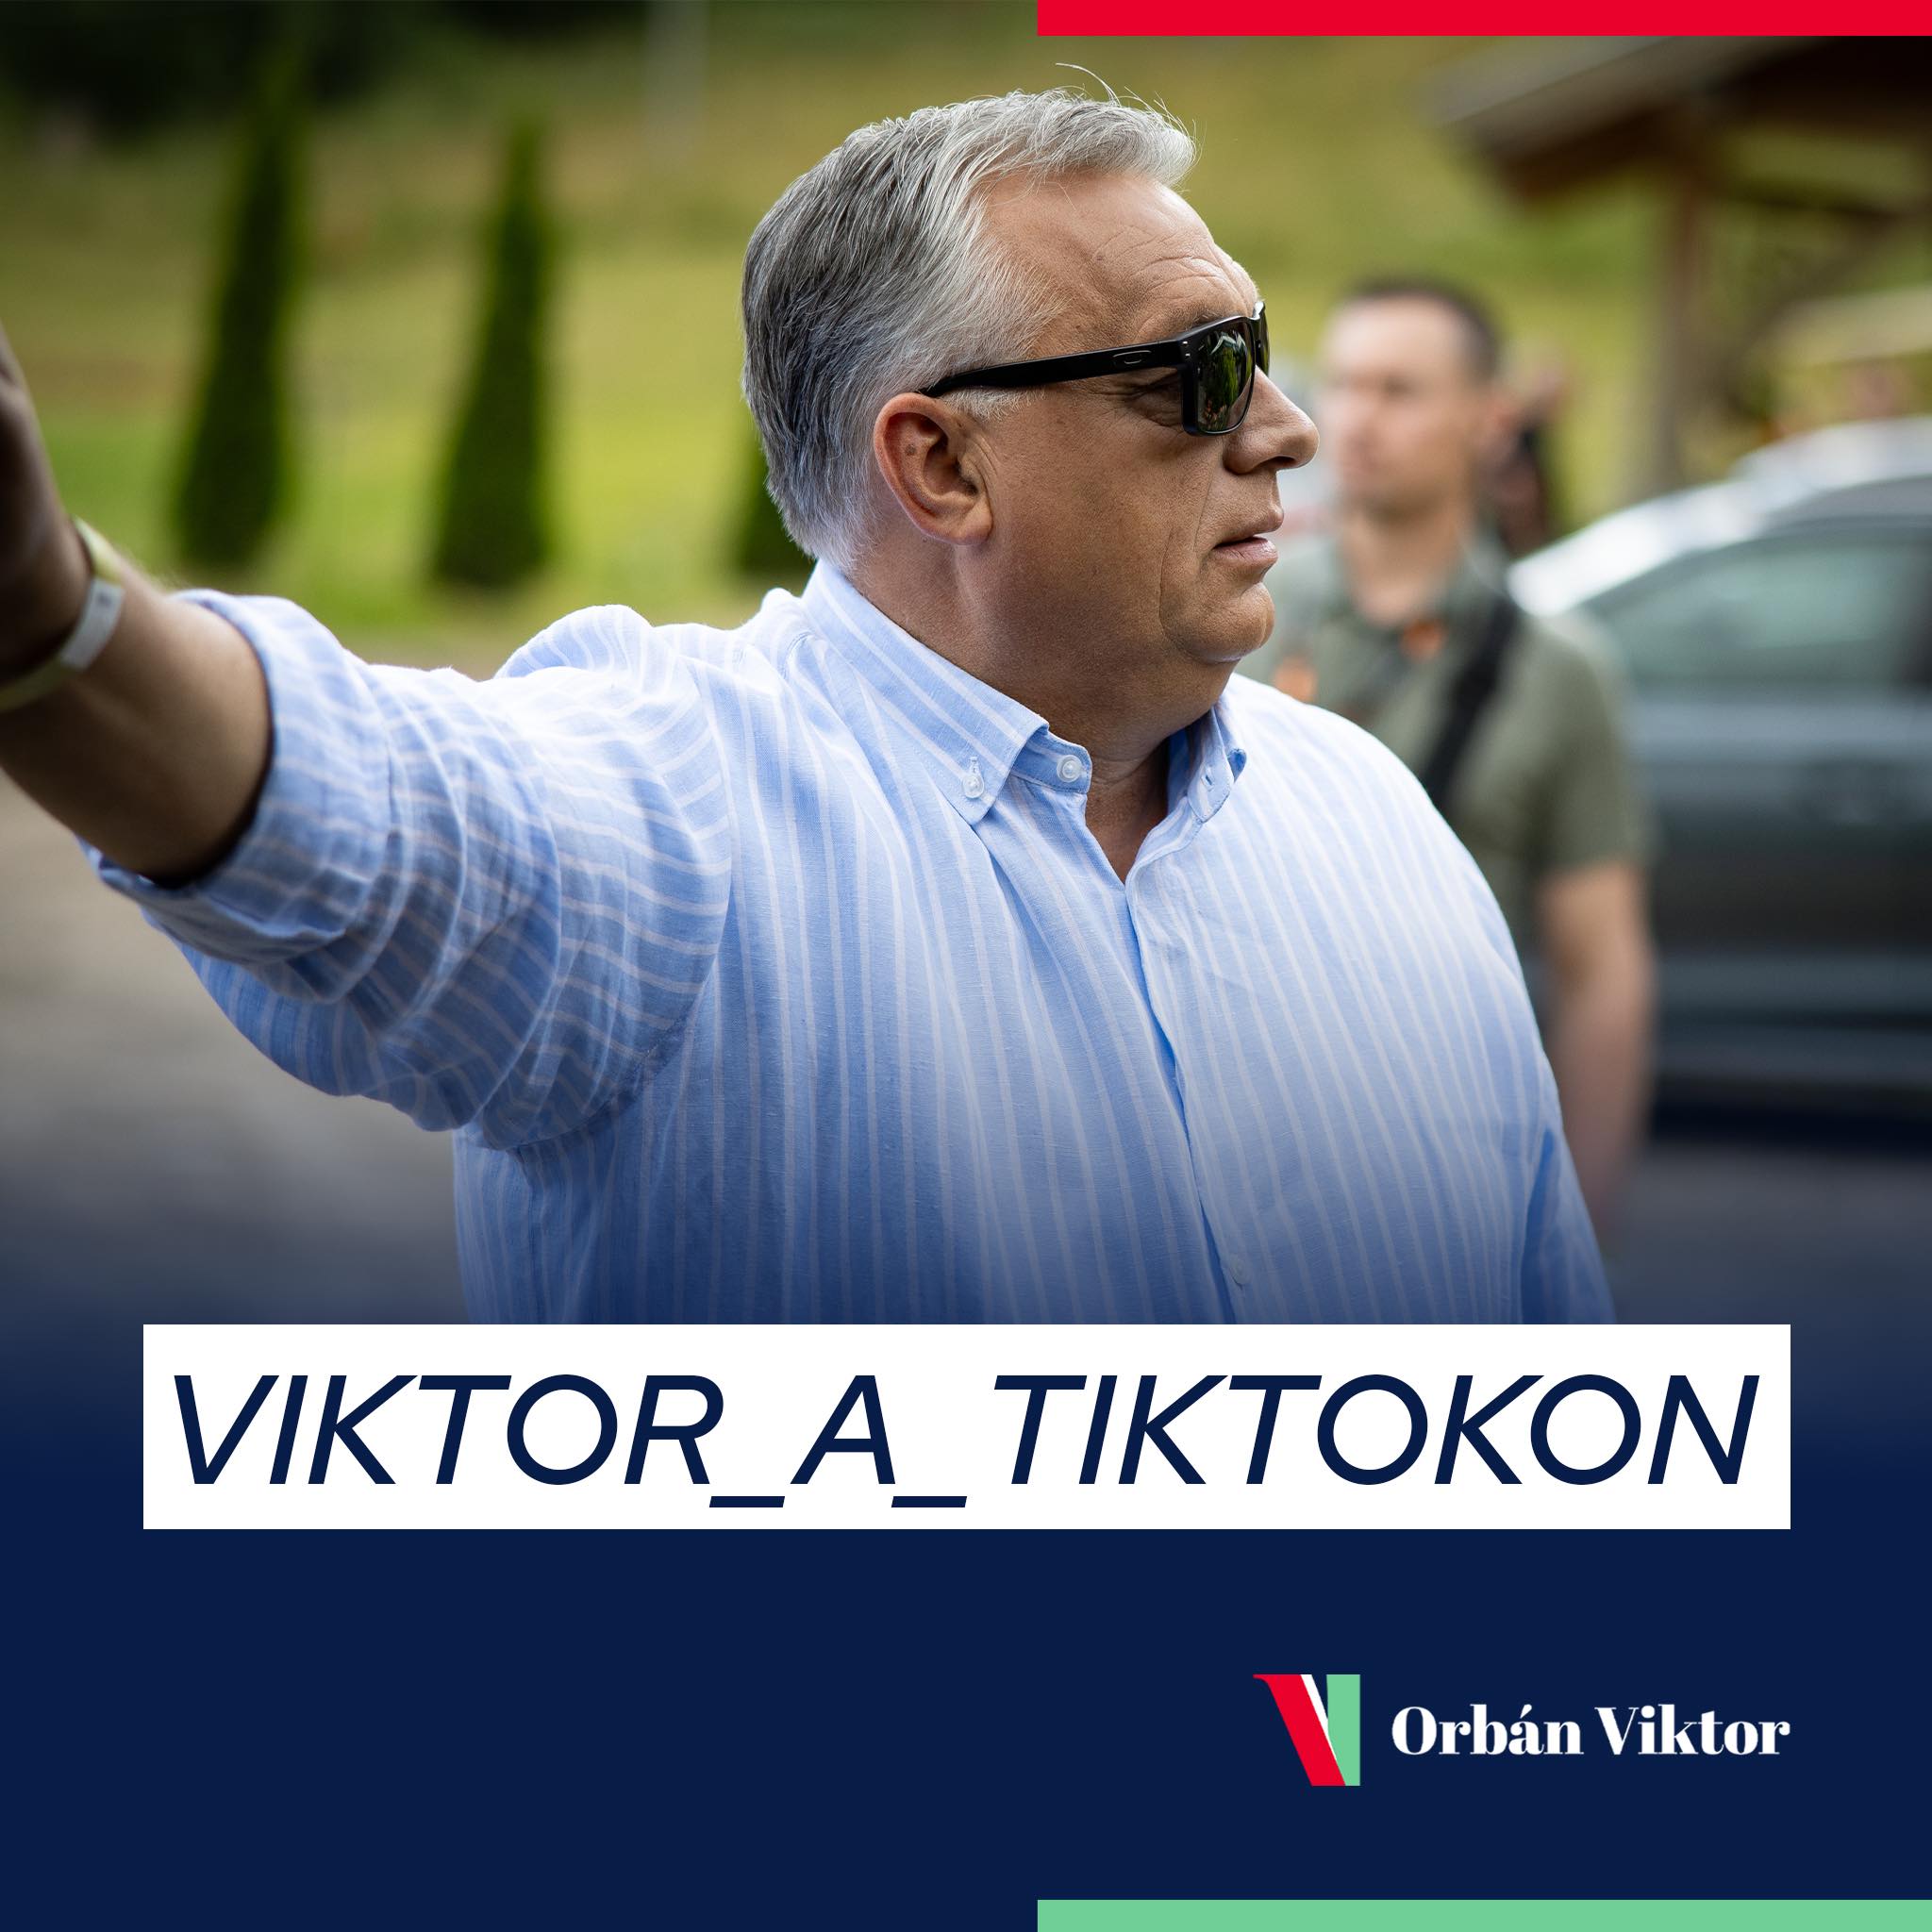 Orbán Viktor már a TikTokon is! https://www.tiktok.com/@viktor_a_tiktokon